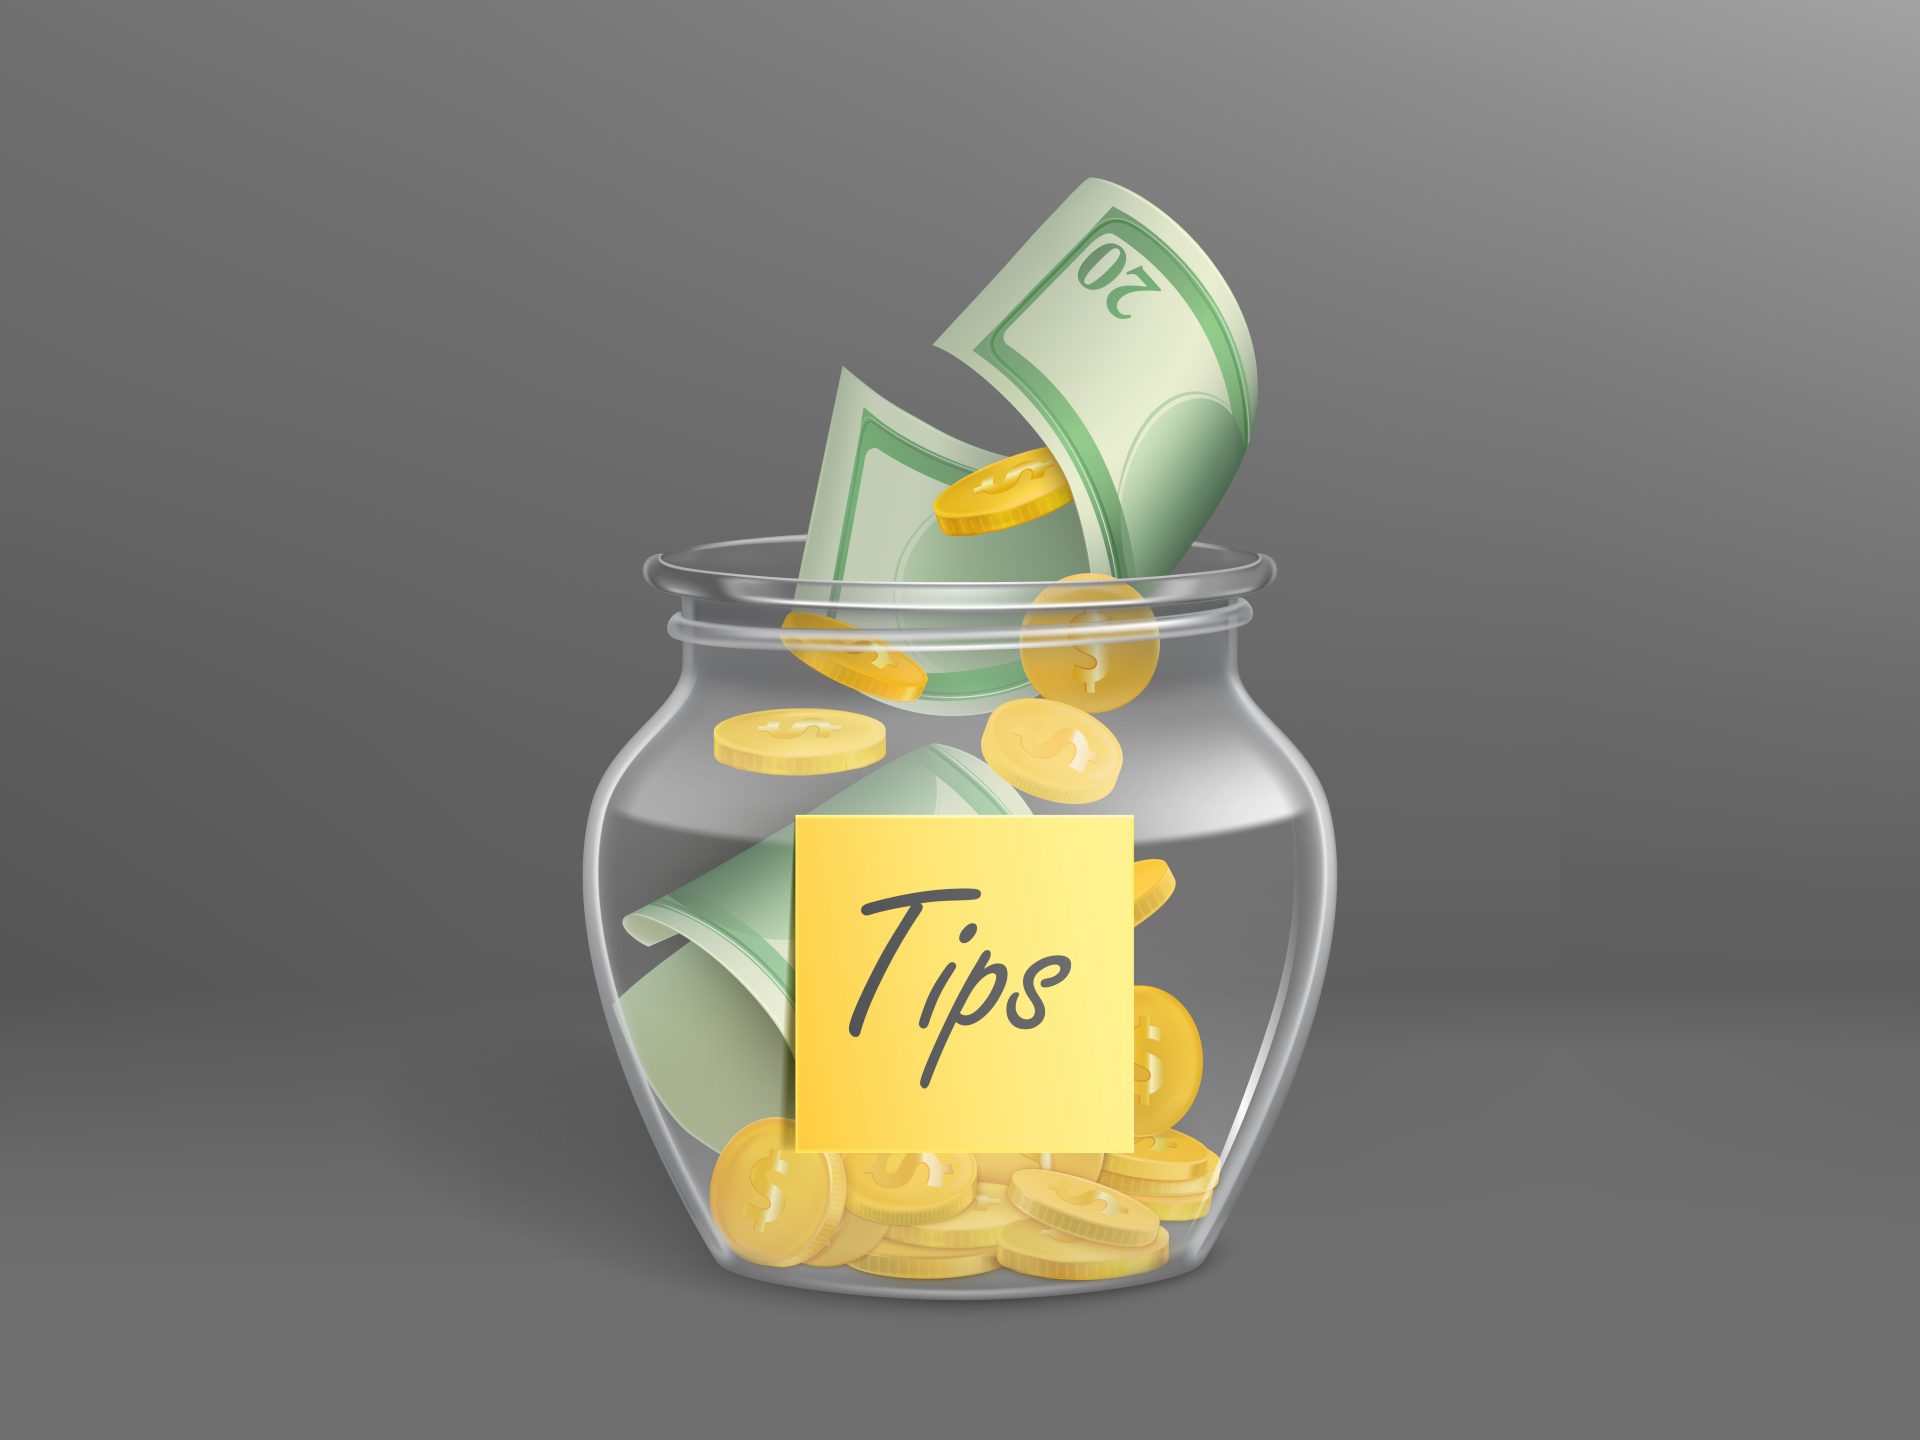 tips-finantial